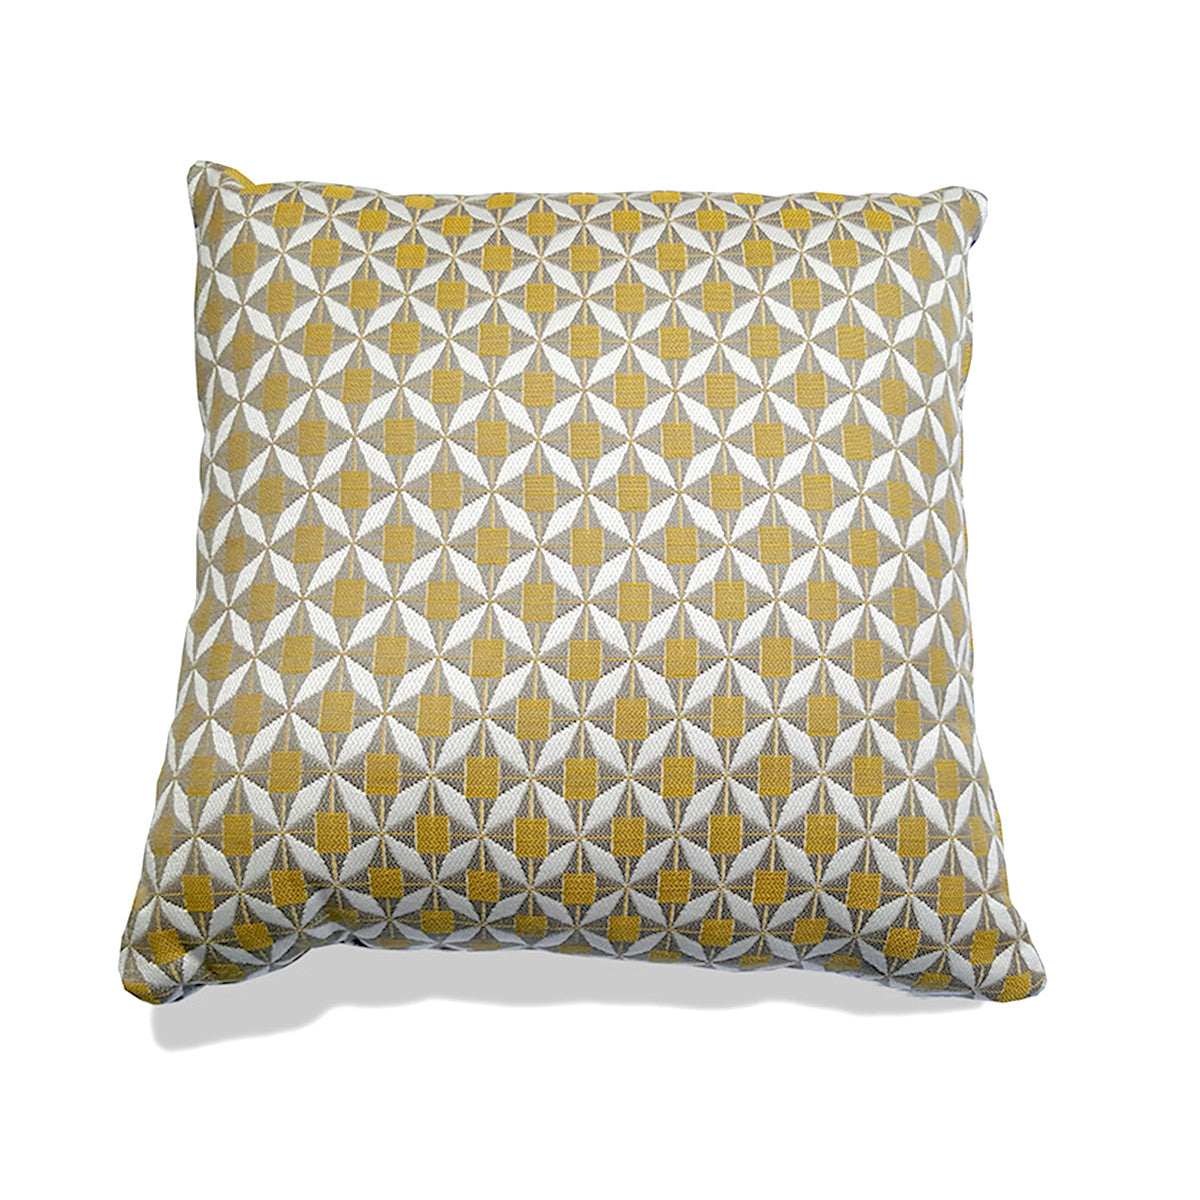 Pair of Yellow Mosaic Outdoor Cushions